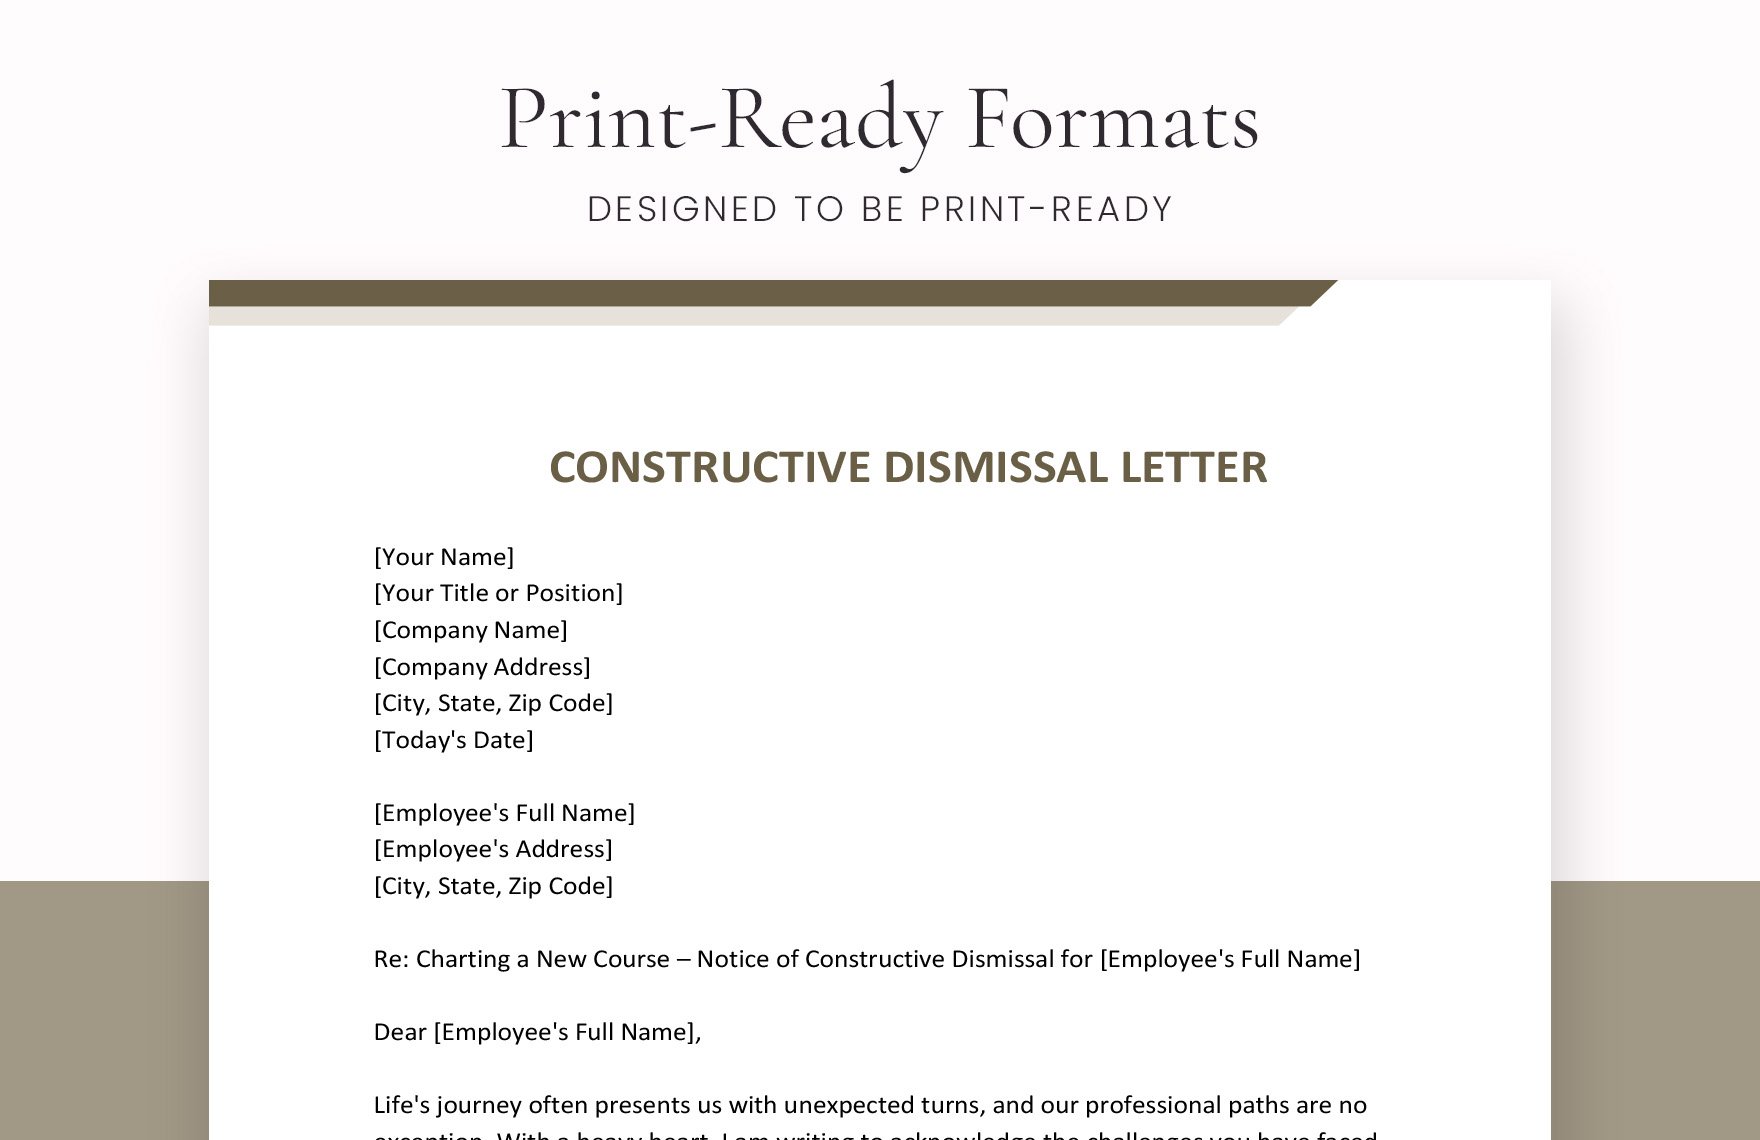 Constructive Dismissal Letter